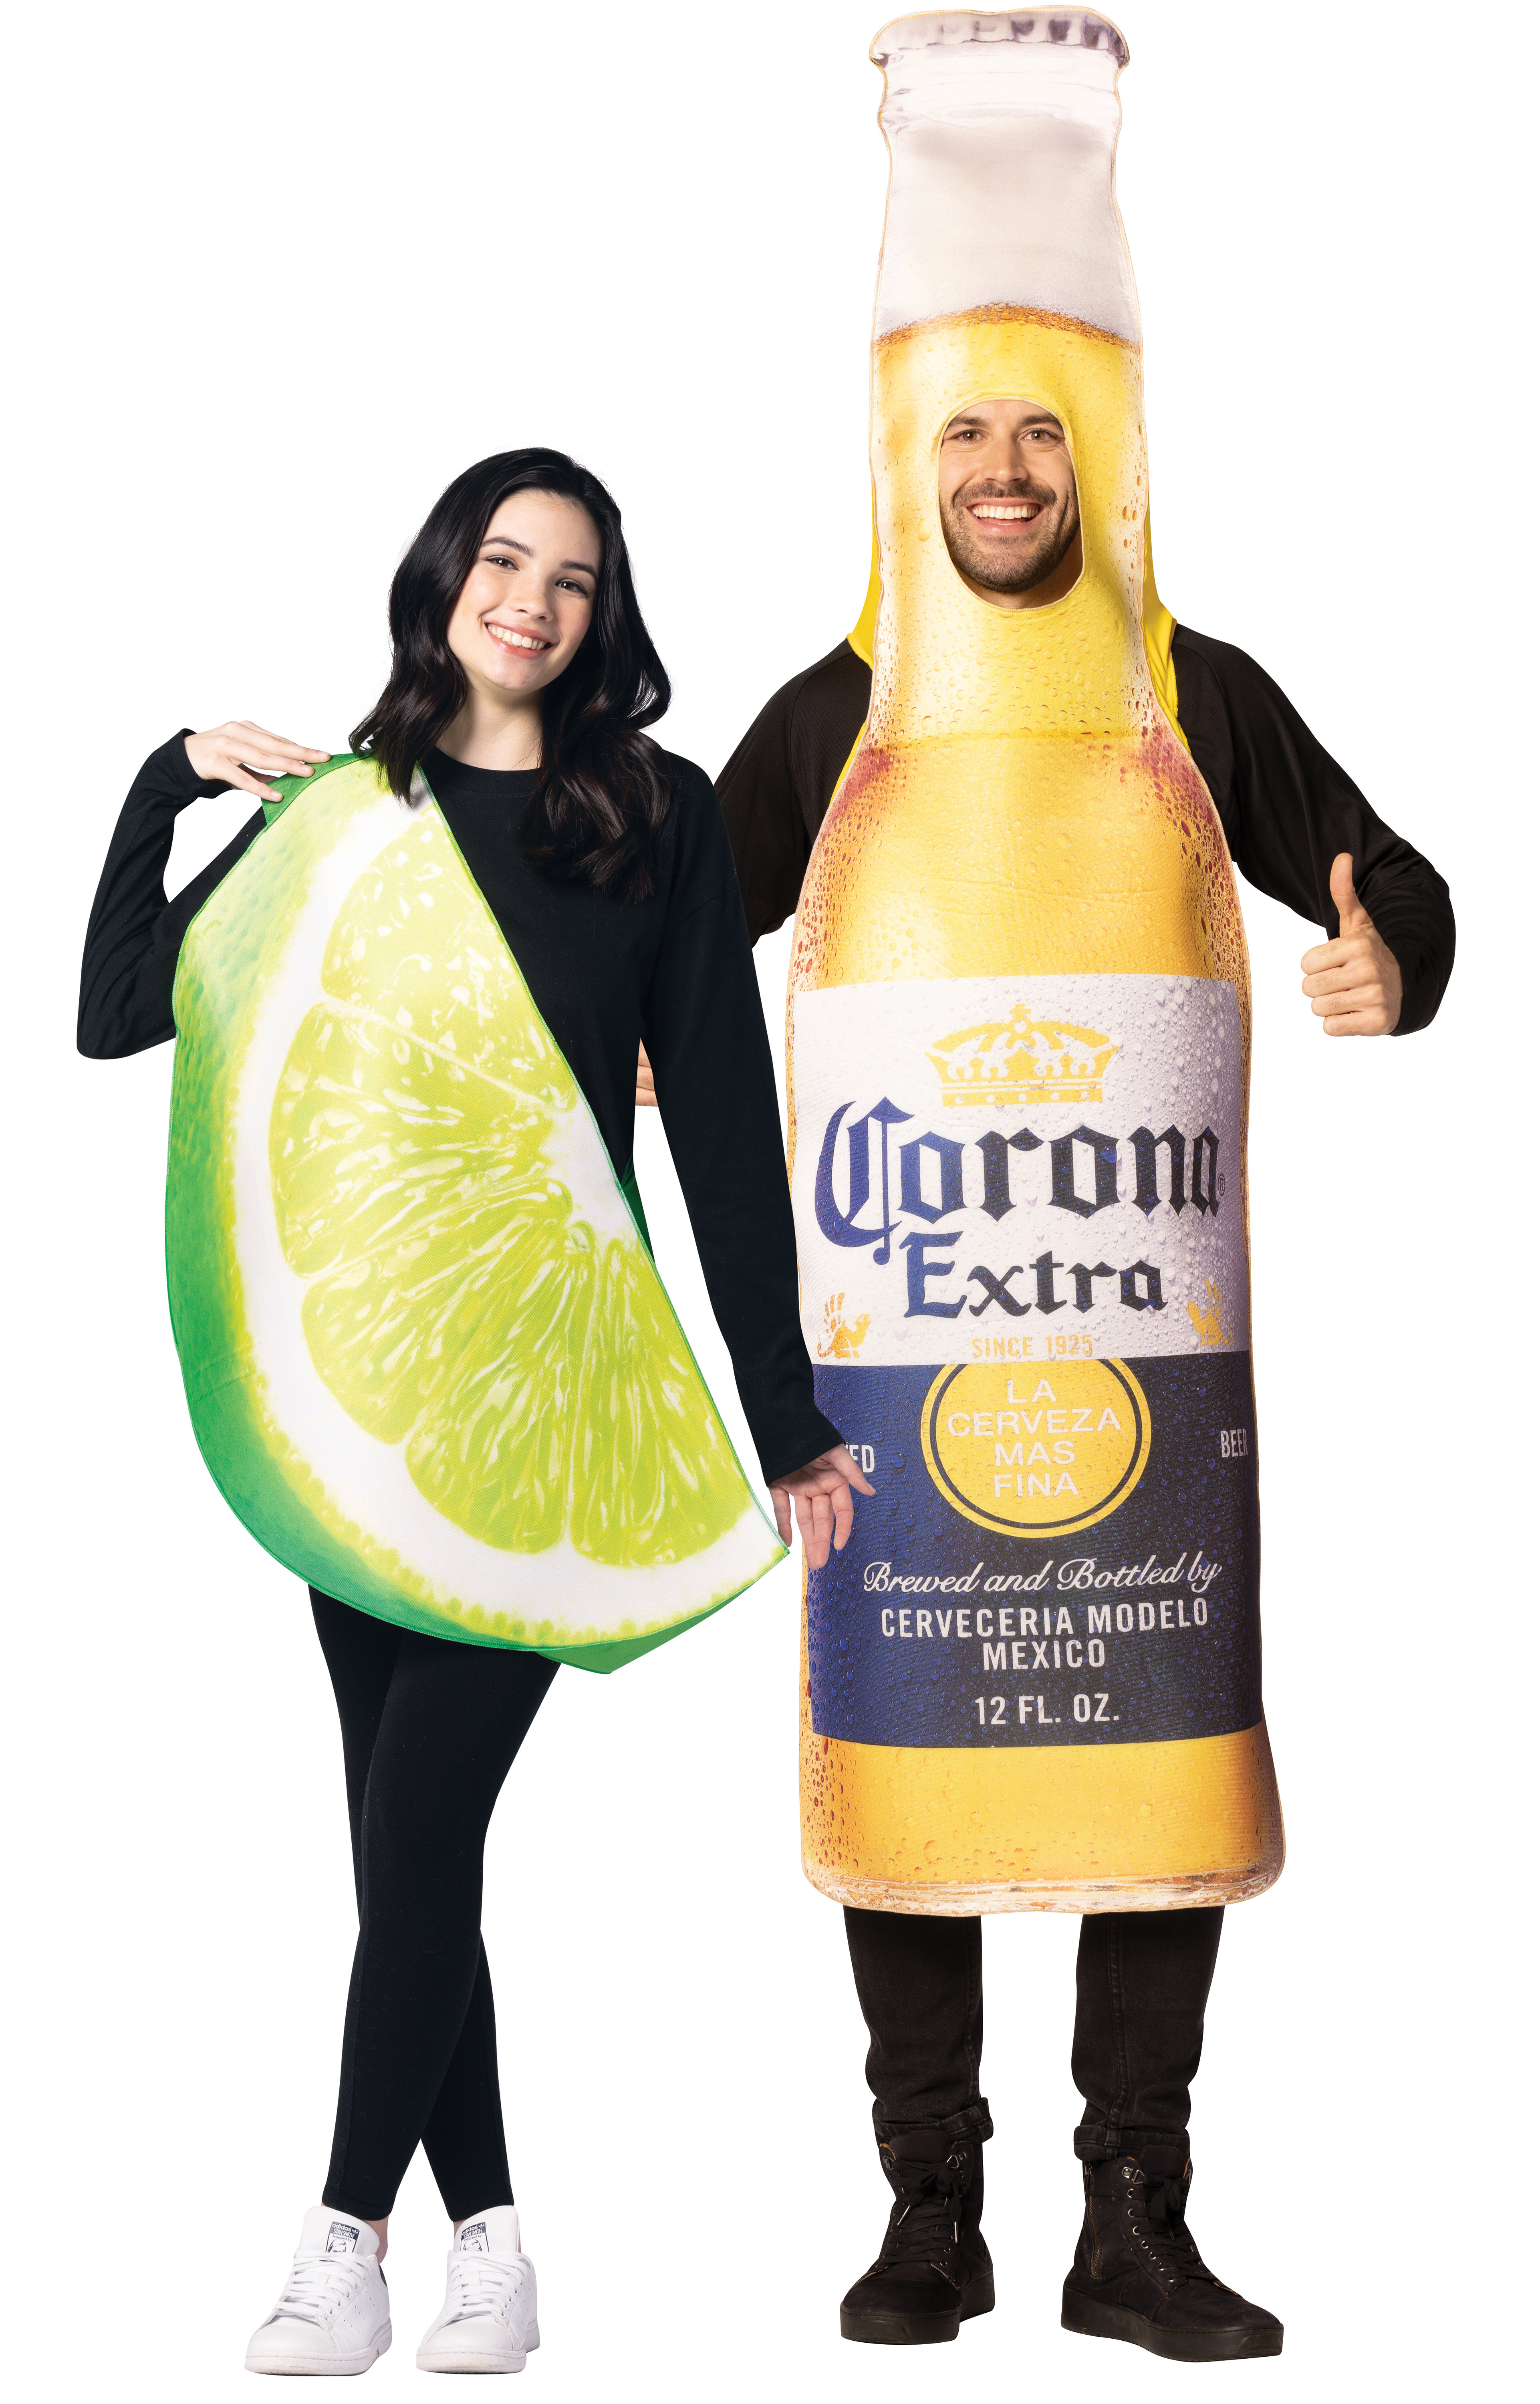 icee drink costume